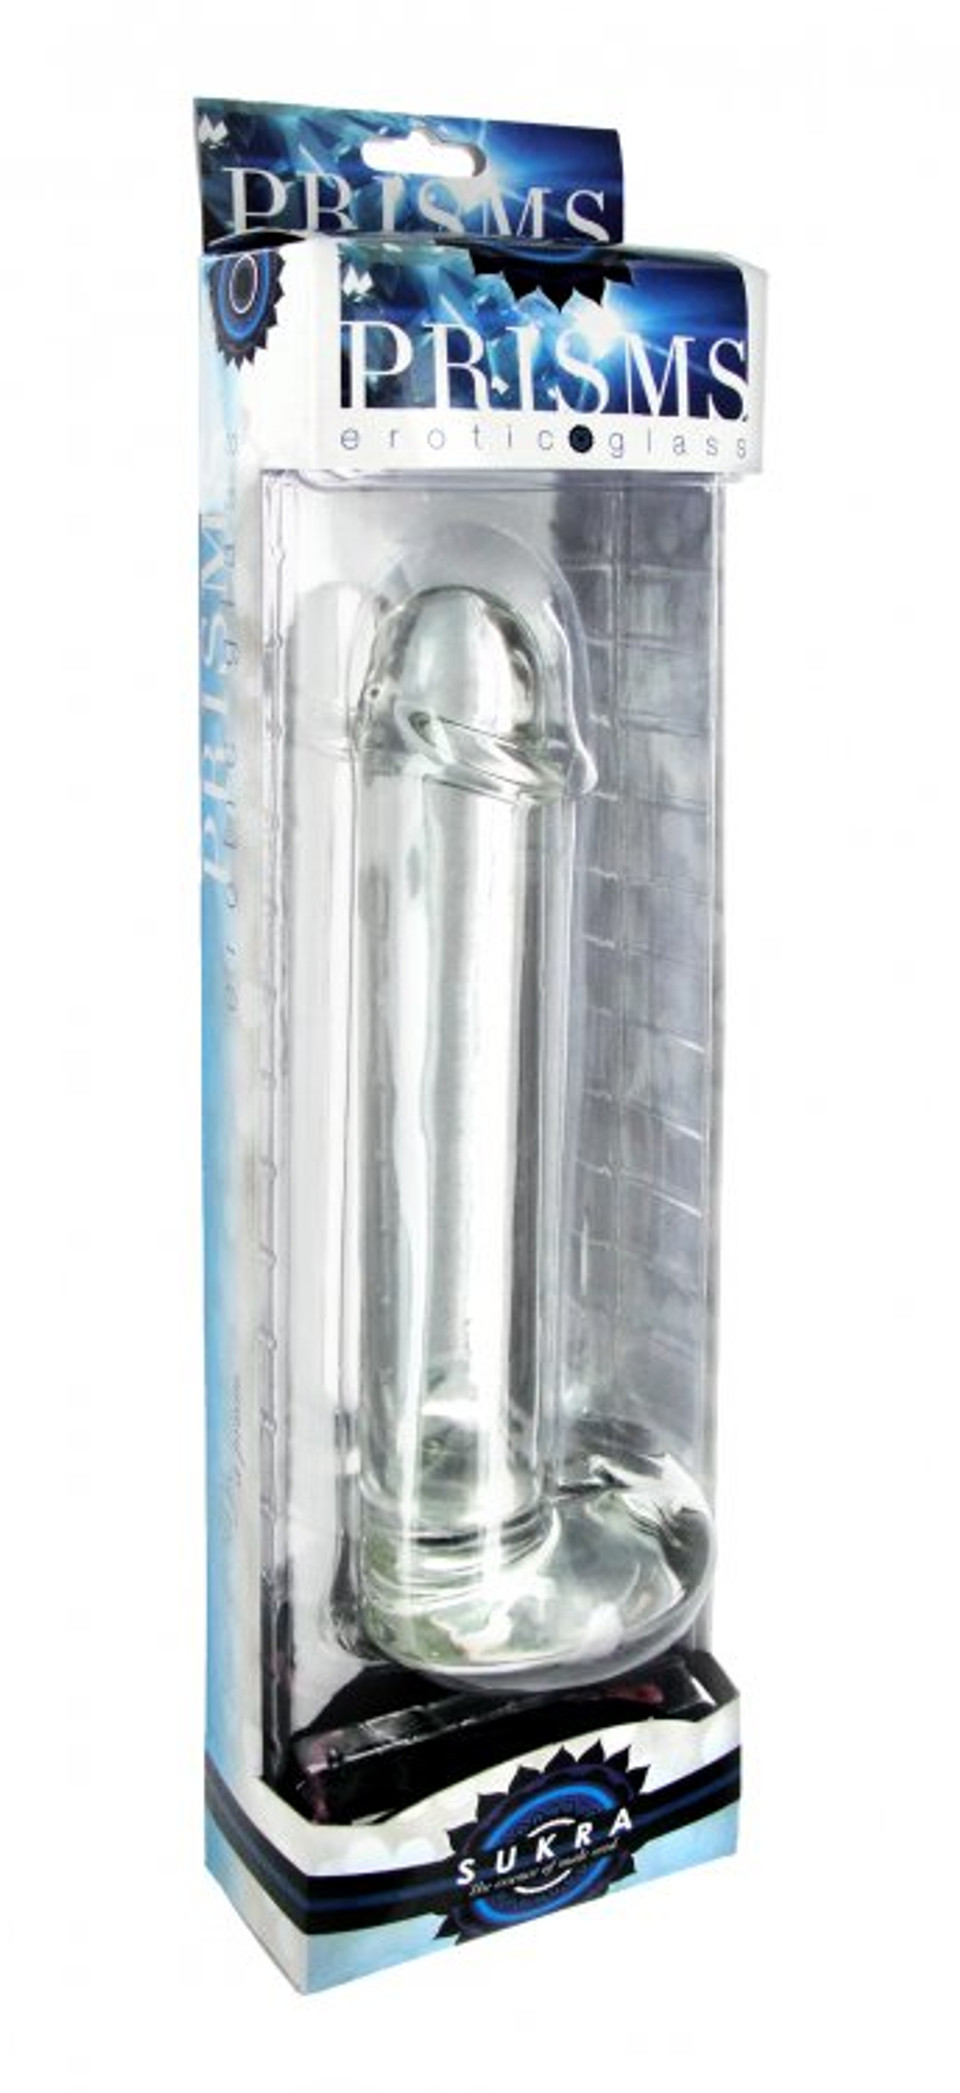 Prisms Sukra 9 Inch Realistic Glass Dildo Dallas Novelty Online Sex Toys Retailer 